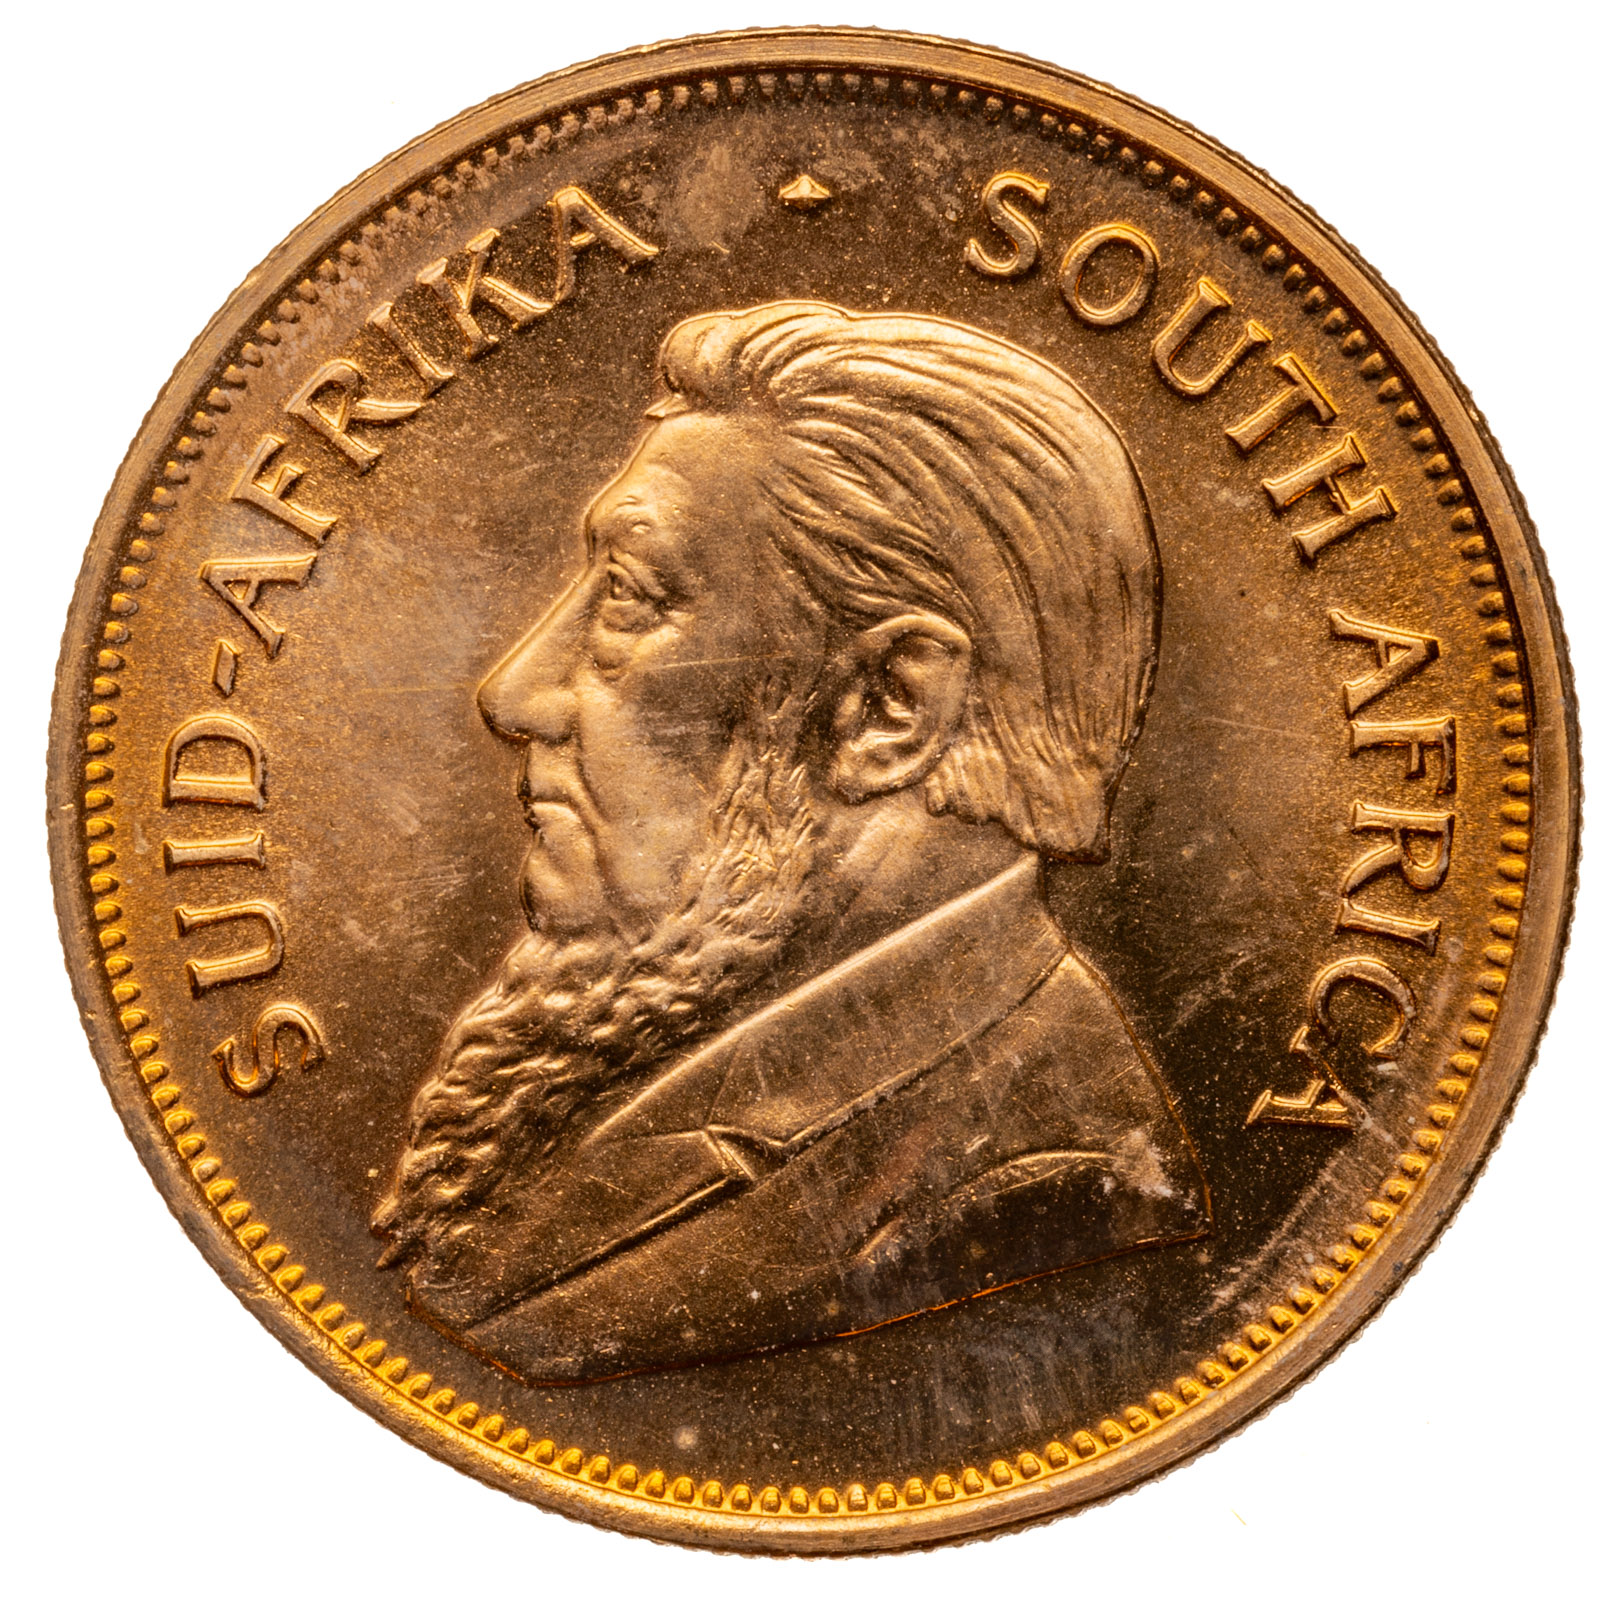 1875 GOLD KRUGERRAND SOUTH AFRICA 3cb5ac